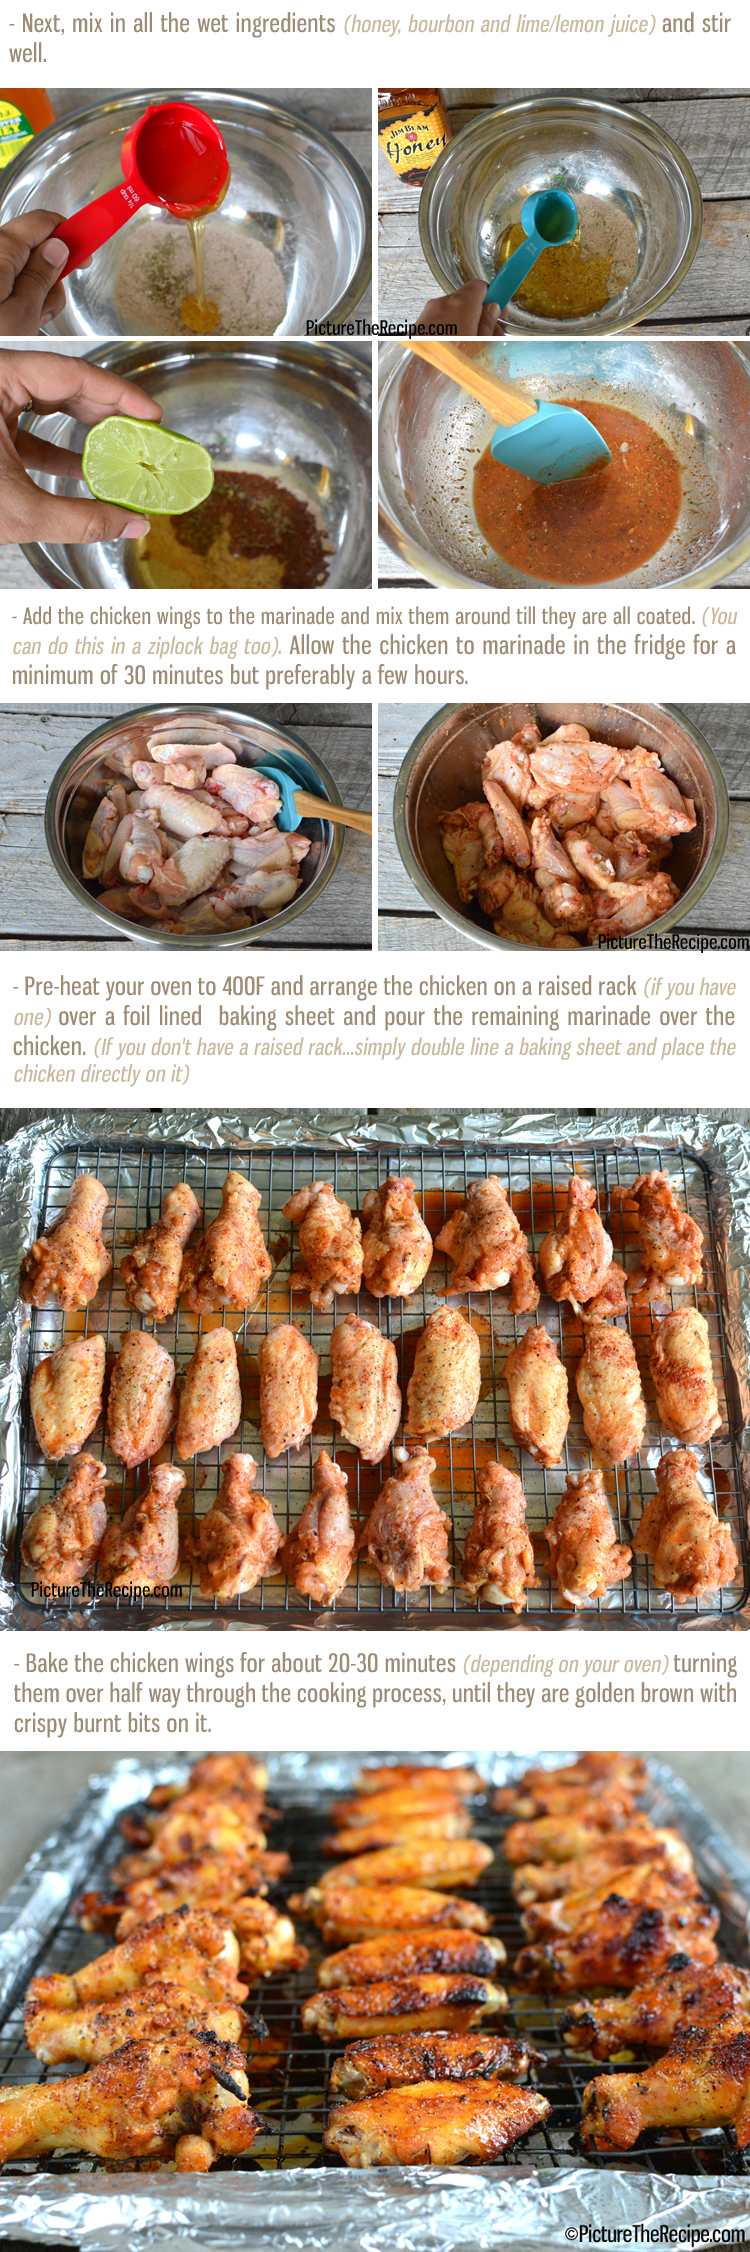 Baken Honey Bourbon Chicken Wings Recipe by PictureTheRecipe (Part-2)